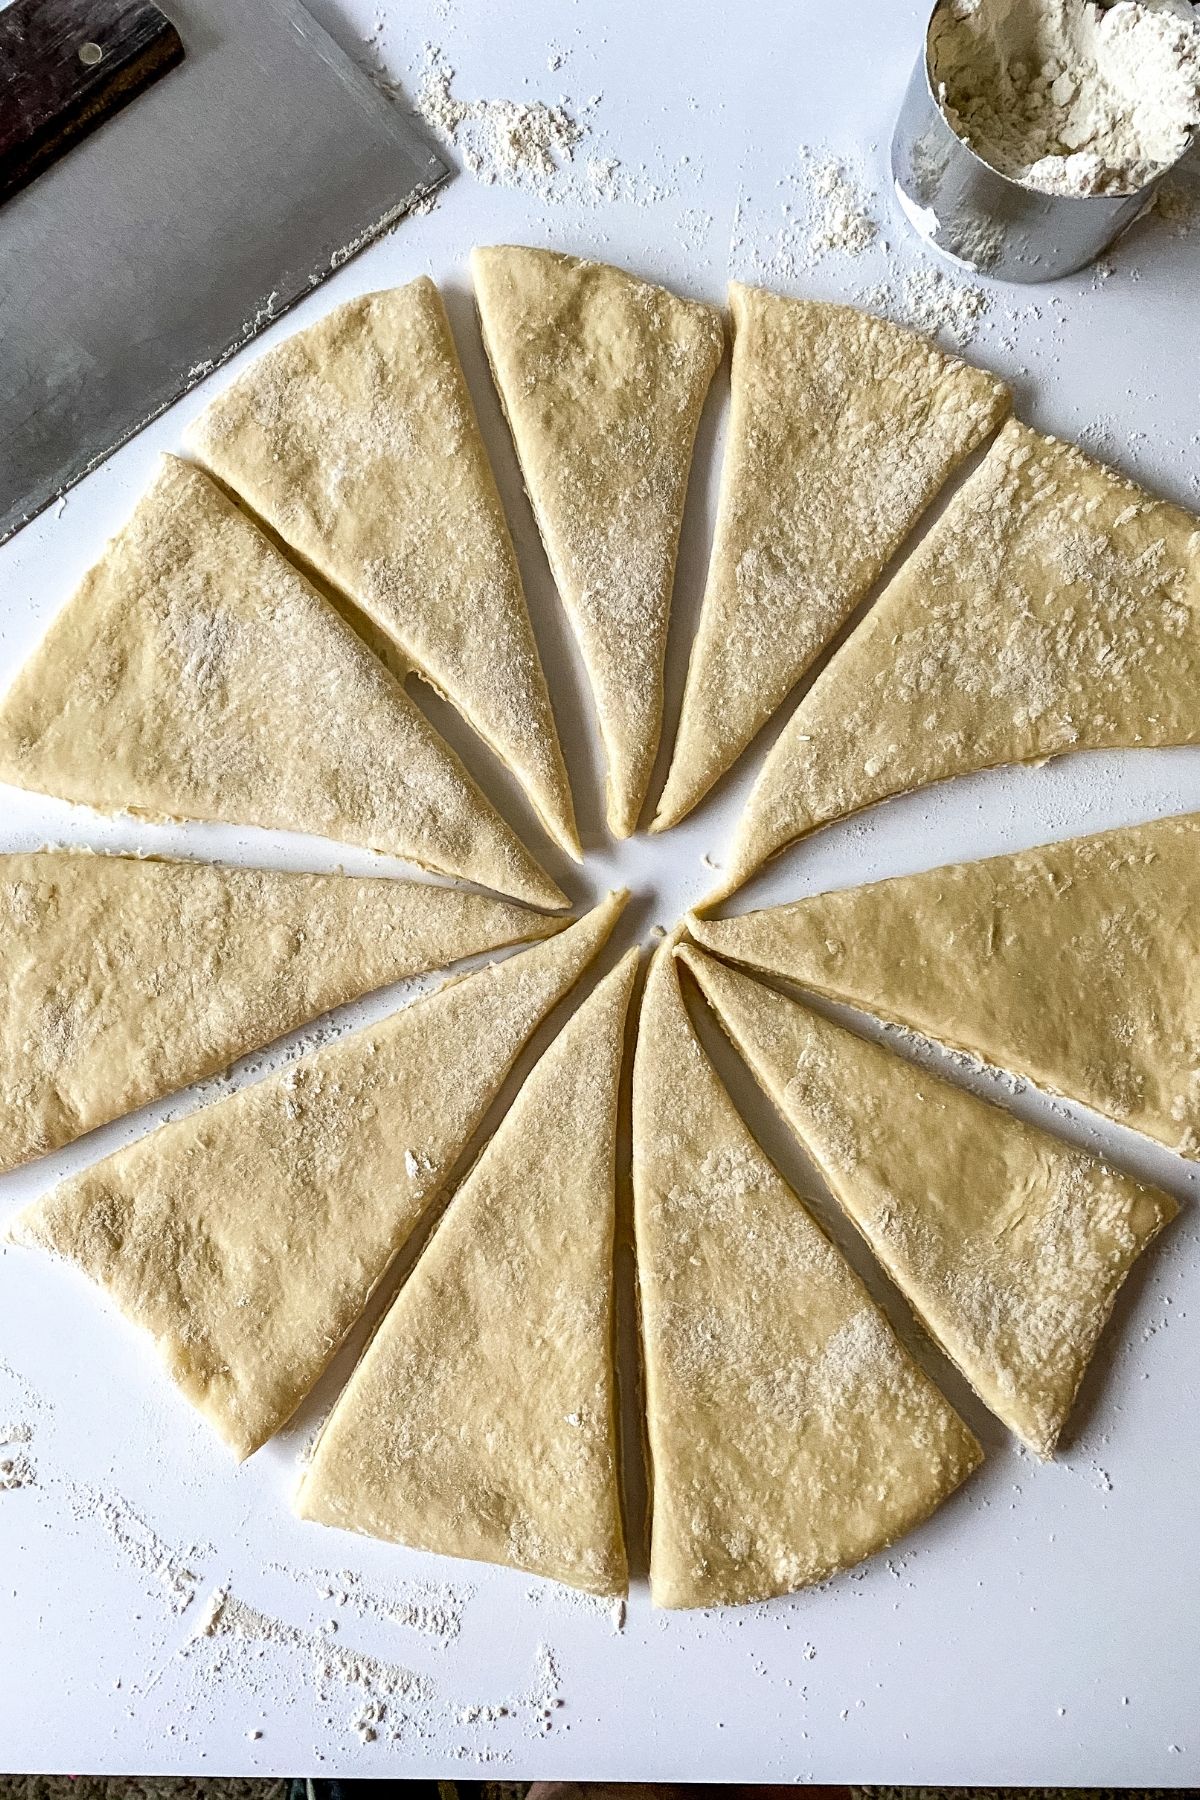 Cutting dough into triangles